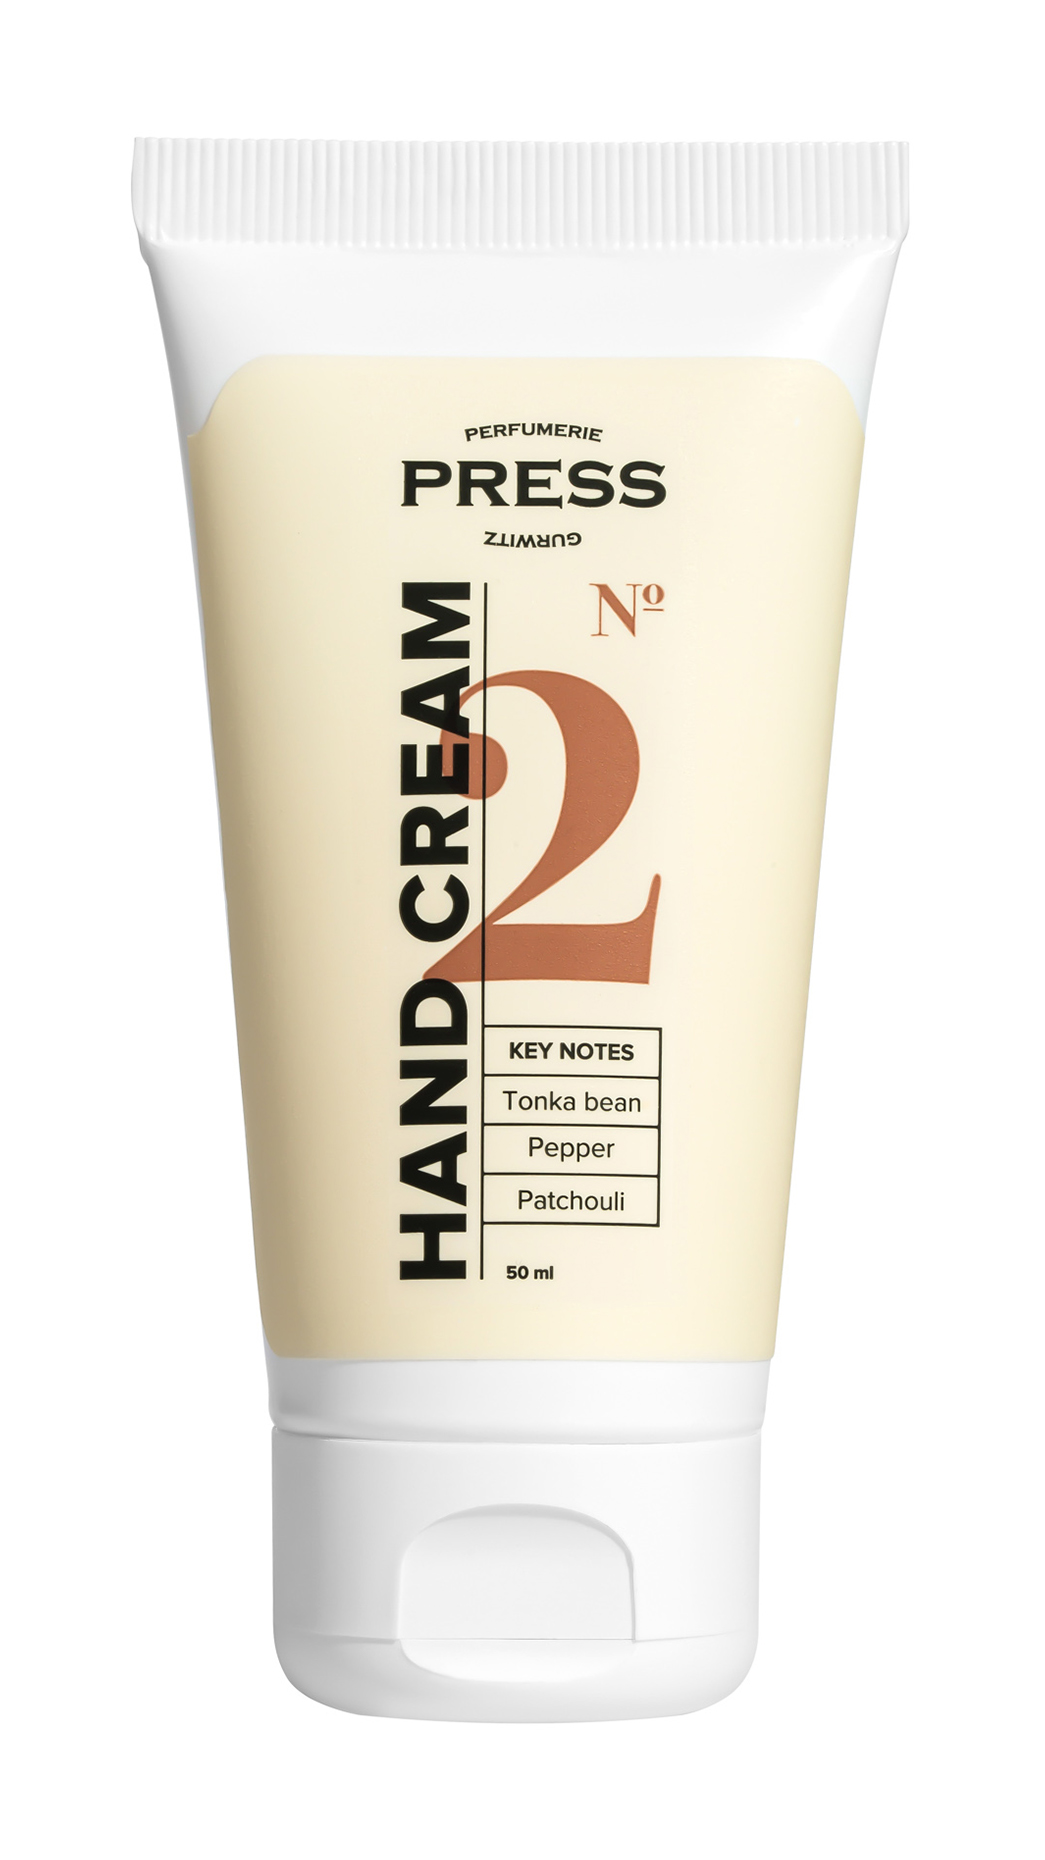 фото Парфюмированный увлажняющий крем для рук, press gurwitz hand cream № 2, 50мл press gurwitz perfumerie